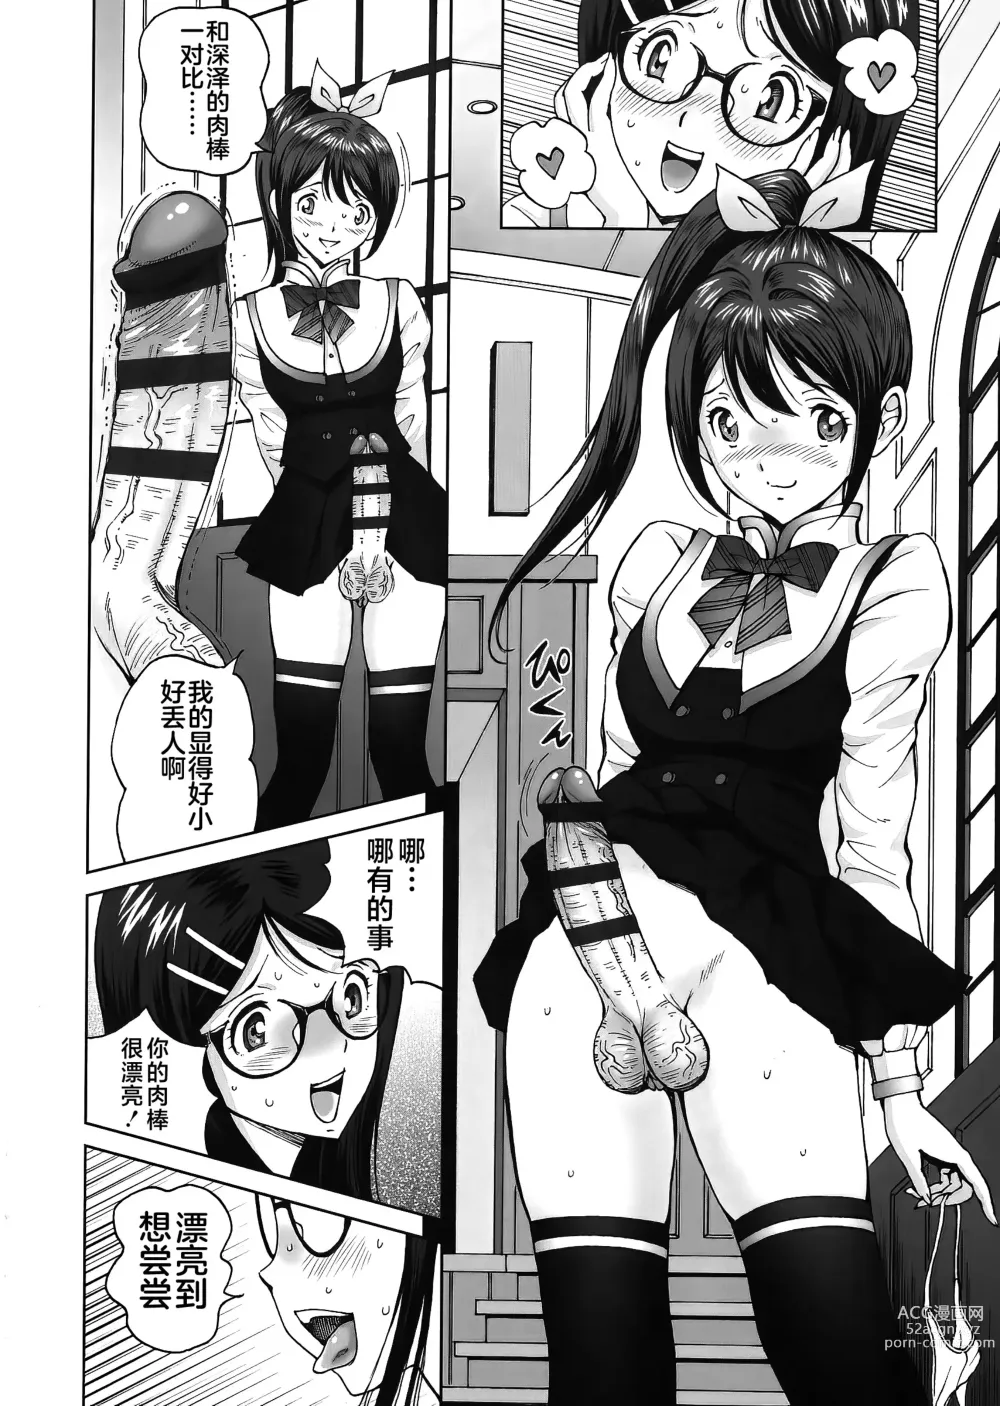 Page 12 of manga エンジョイNEWライフ 1-2